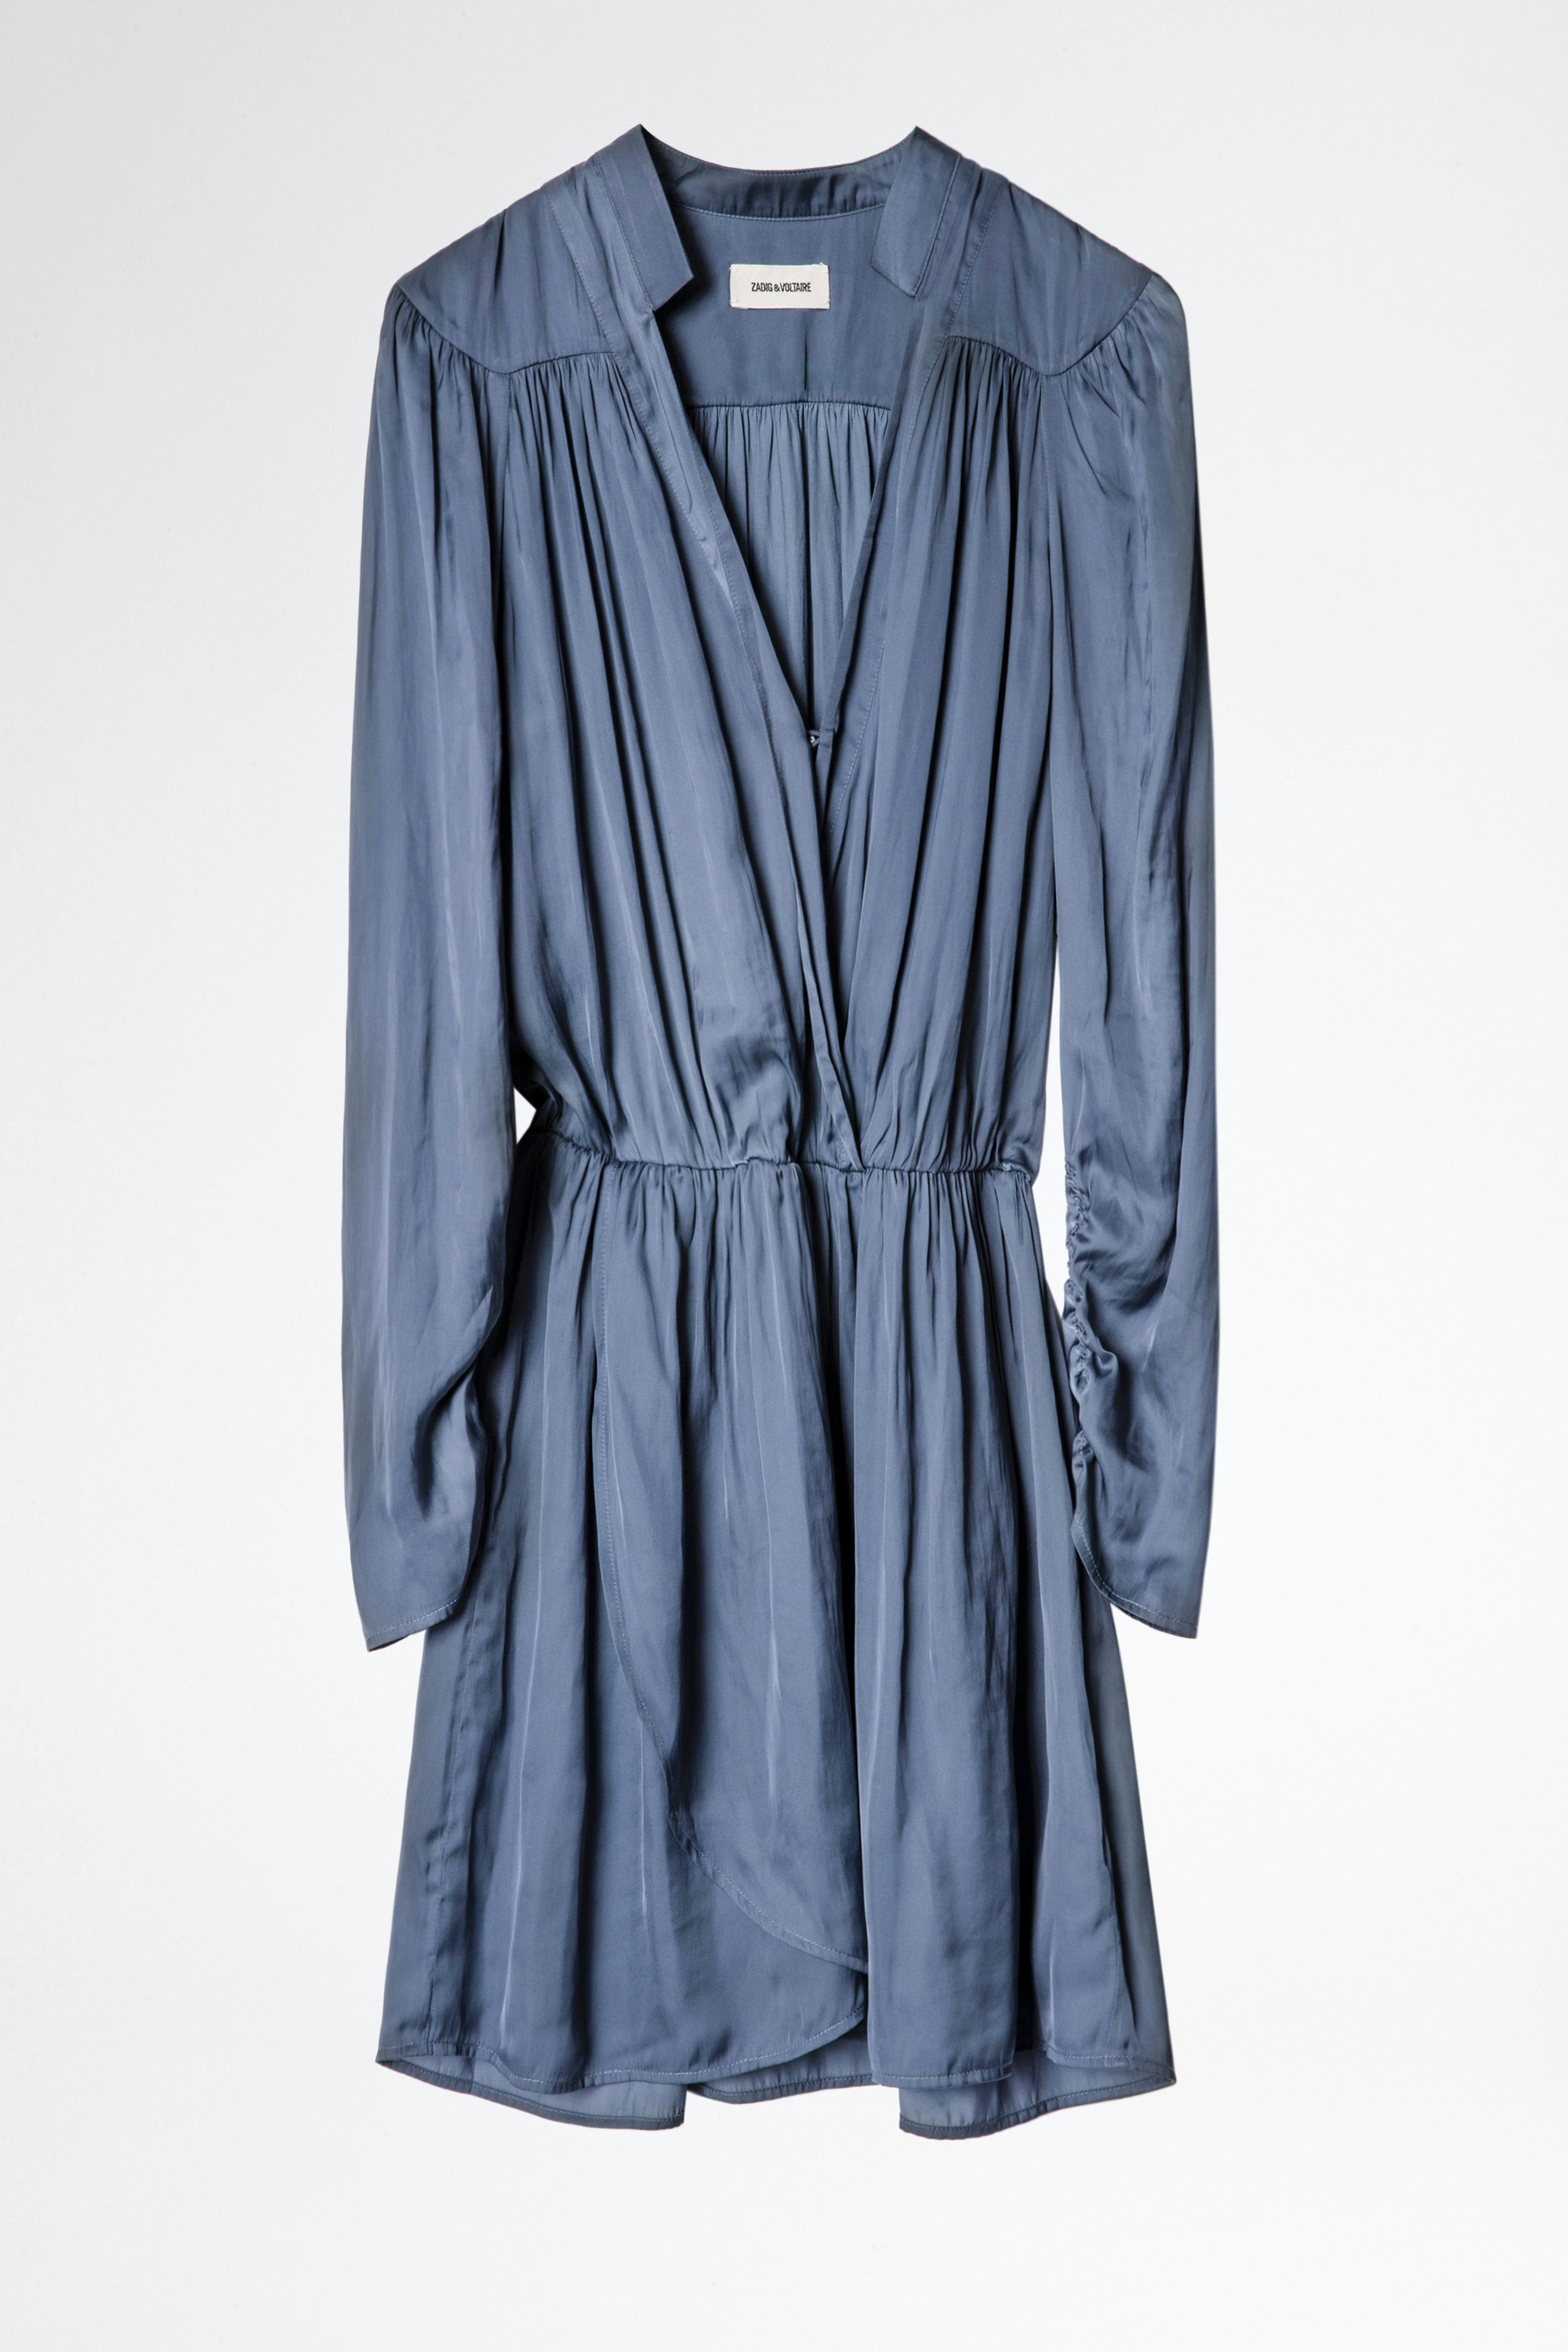 Reveal Satin Dress Women’s gray satin short dress